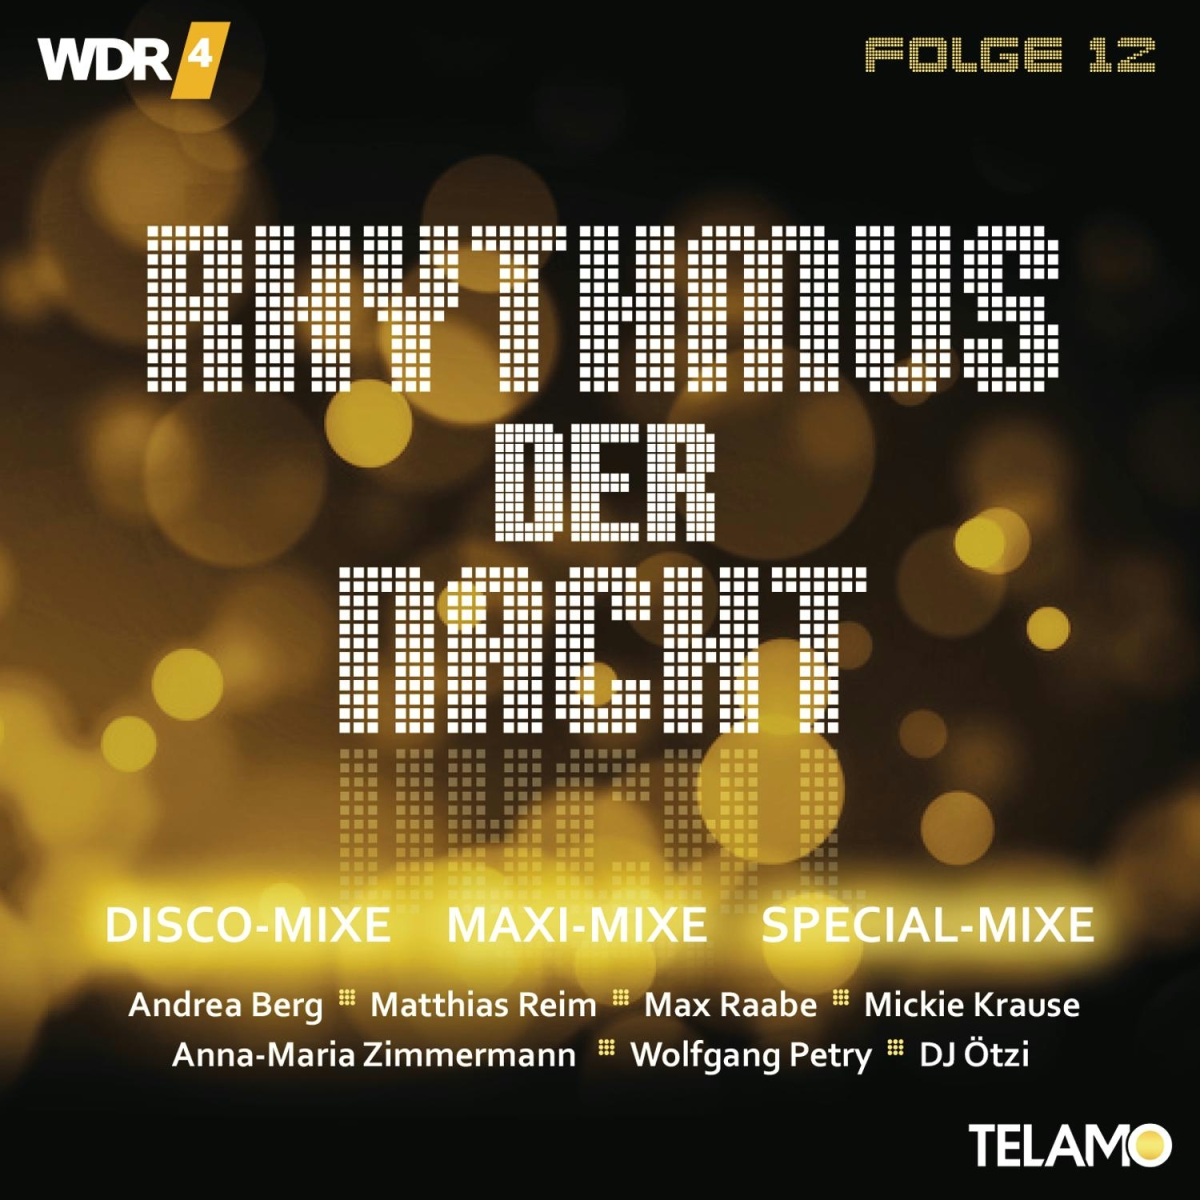 VARIOUS - WDR 4 12 Nacht (CD) Rhythmus Der Folge 